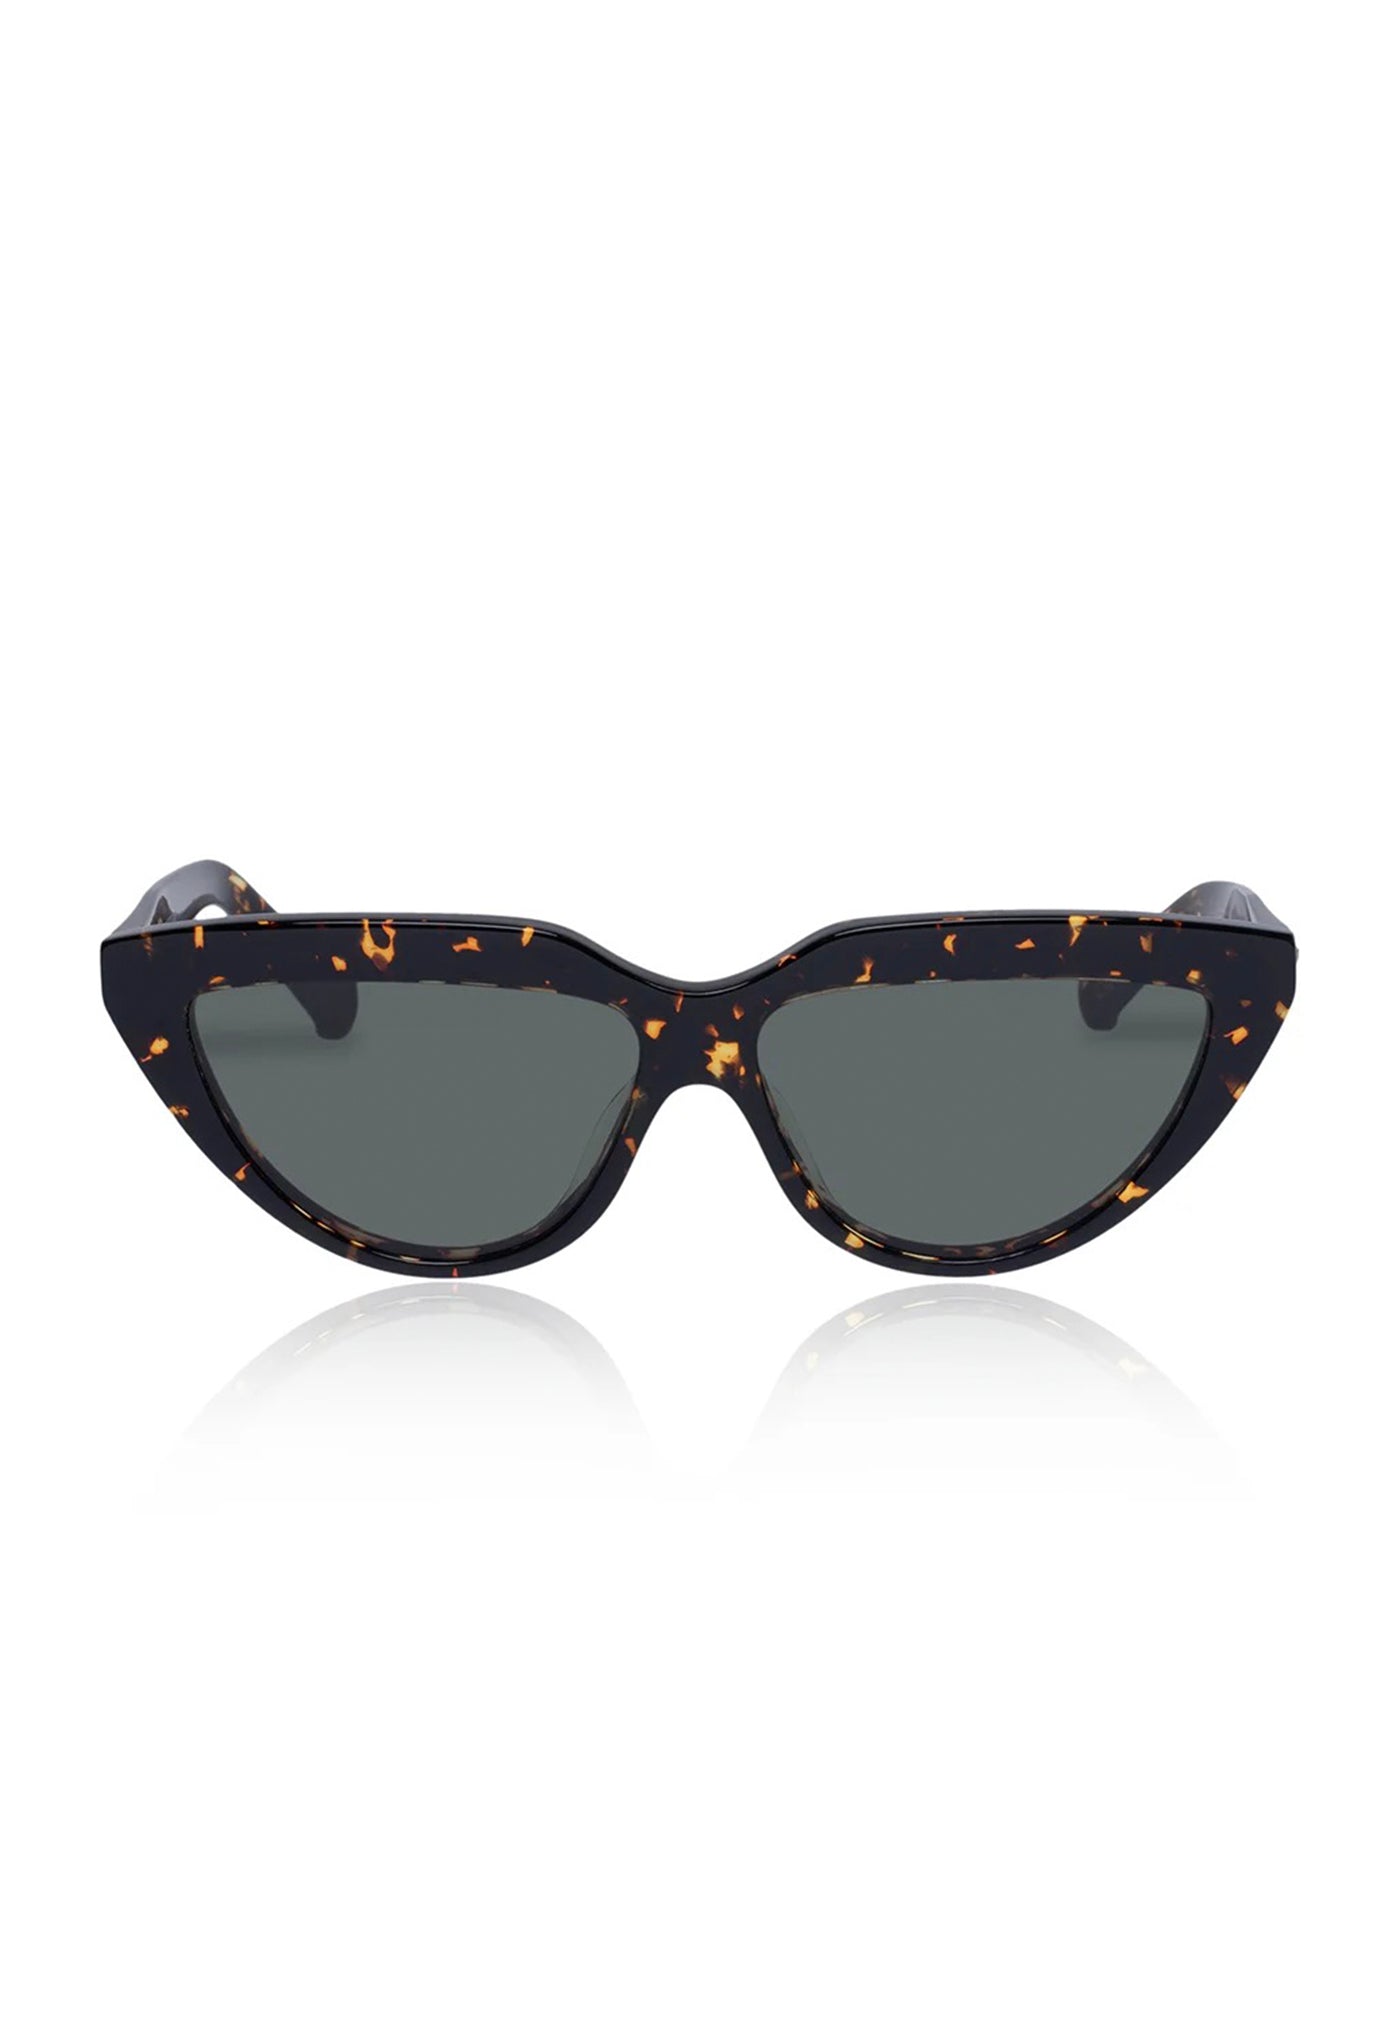 Lash Splash Sunglasses - Cracked Tort sold by Angel Divine